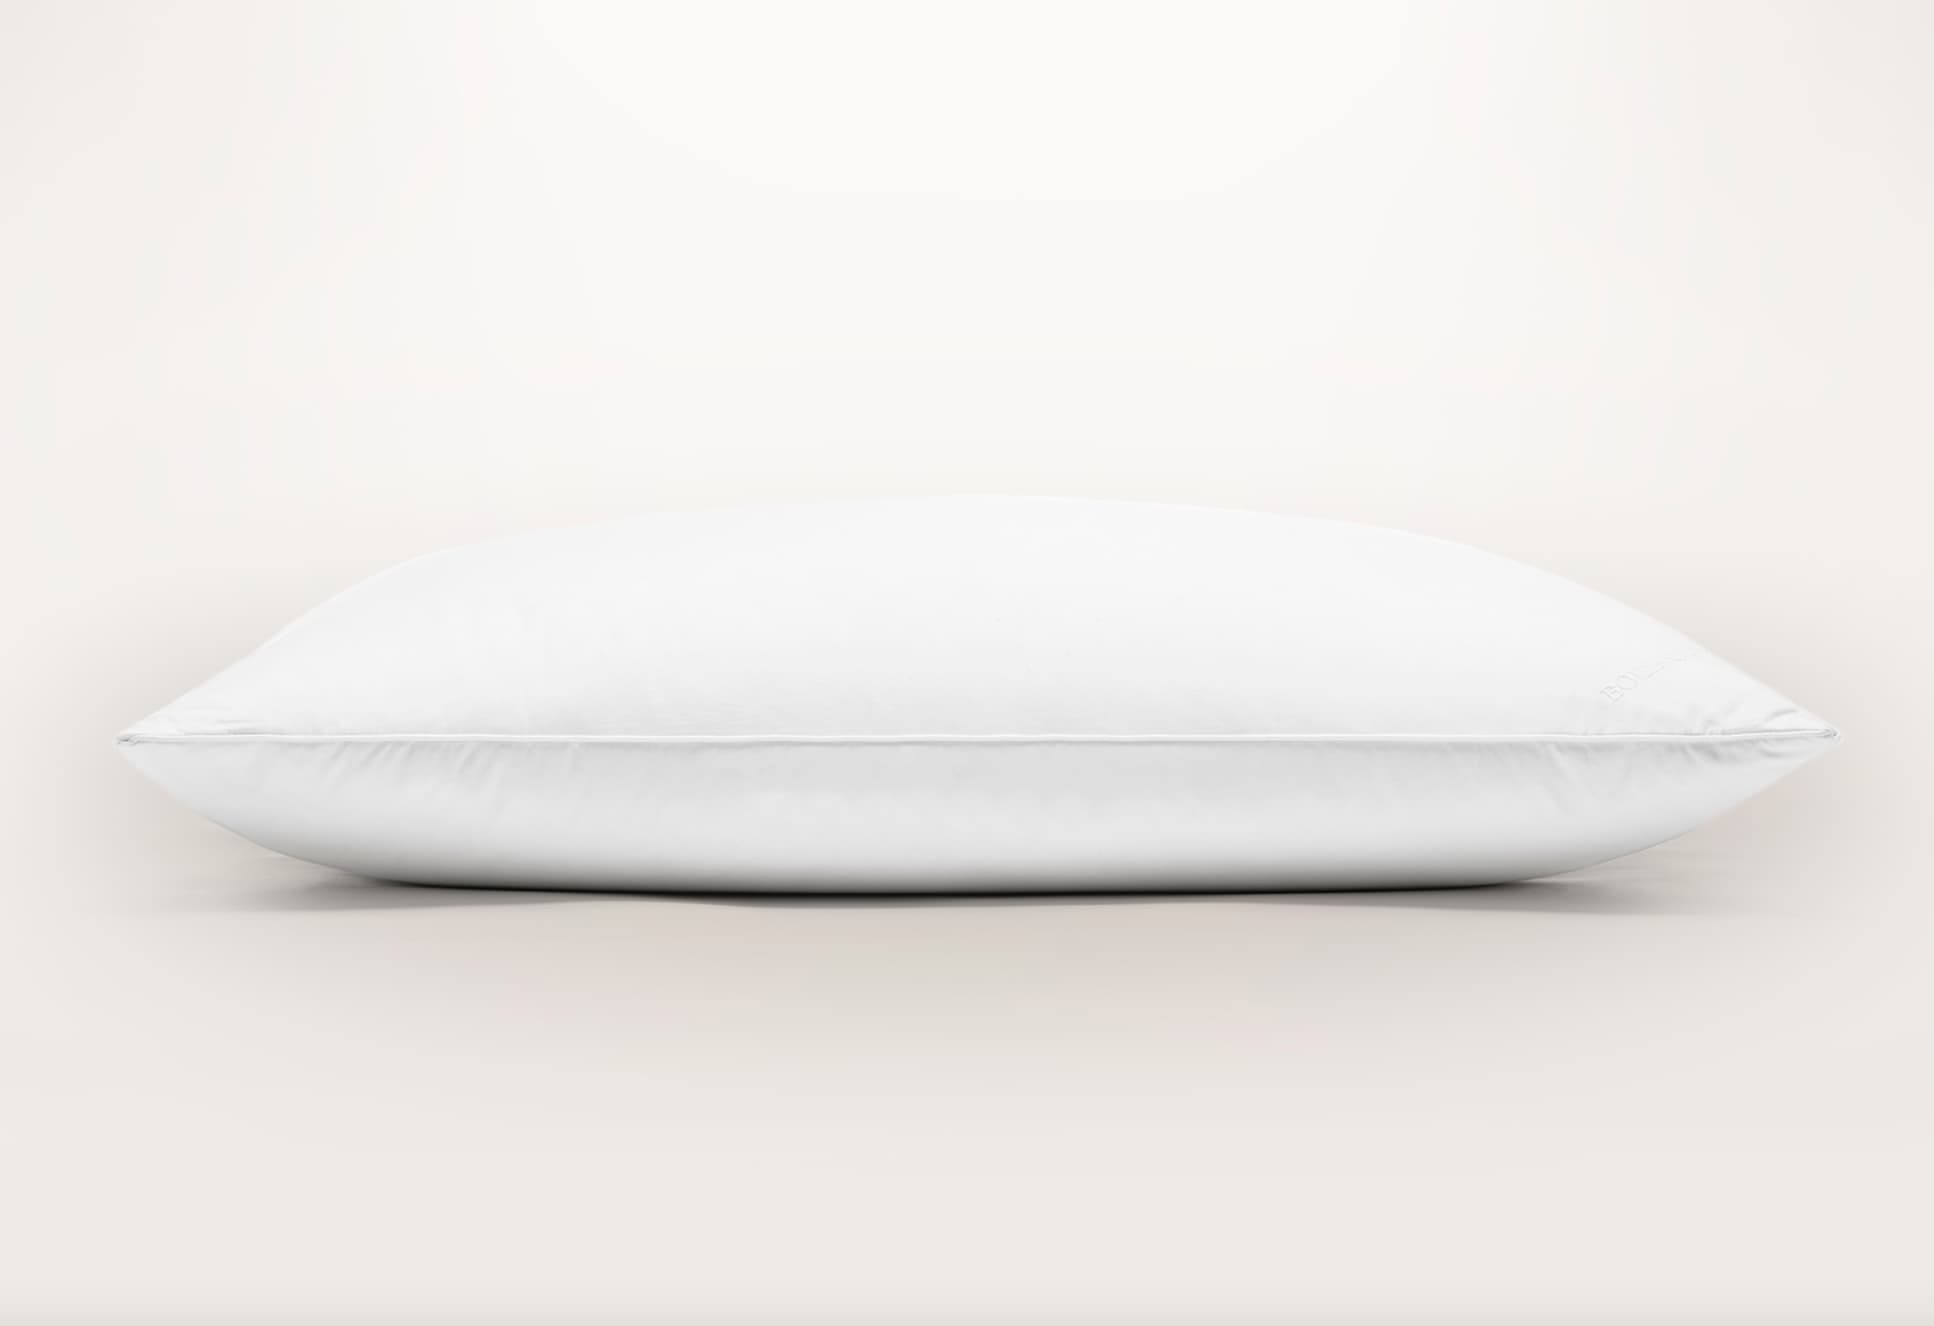 https://media.sleepdoctor.com/images/f_auto,q_auto:eco/v1676678582/thesleepdoctor-com/Boll-Branch-Down-Alternative-Pillow-1/Boll-Branch-Down-Alternative-Pillow-1.png?_i=AA